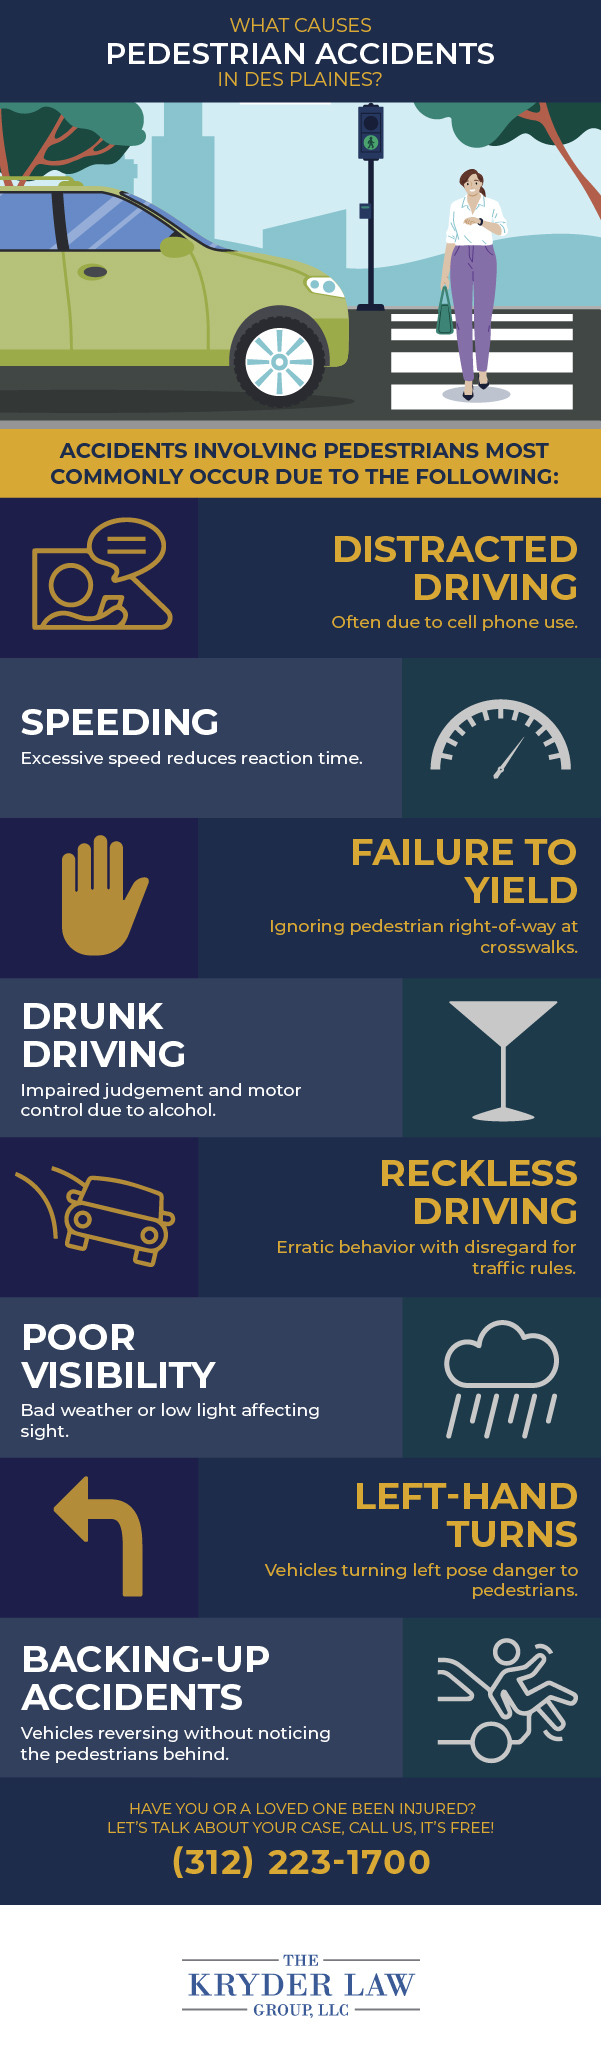 ¿Qué causa los accidentes de peatones en Des Plaines?